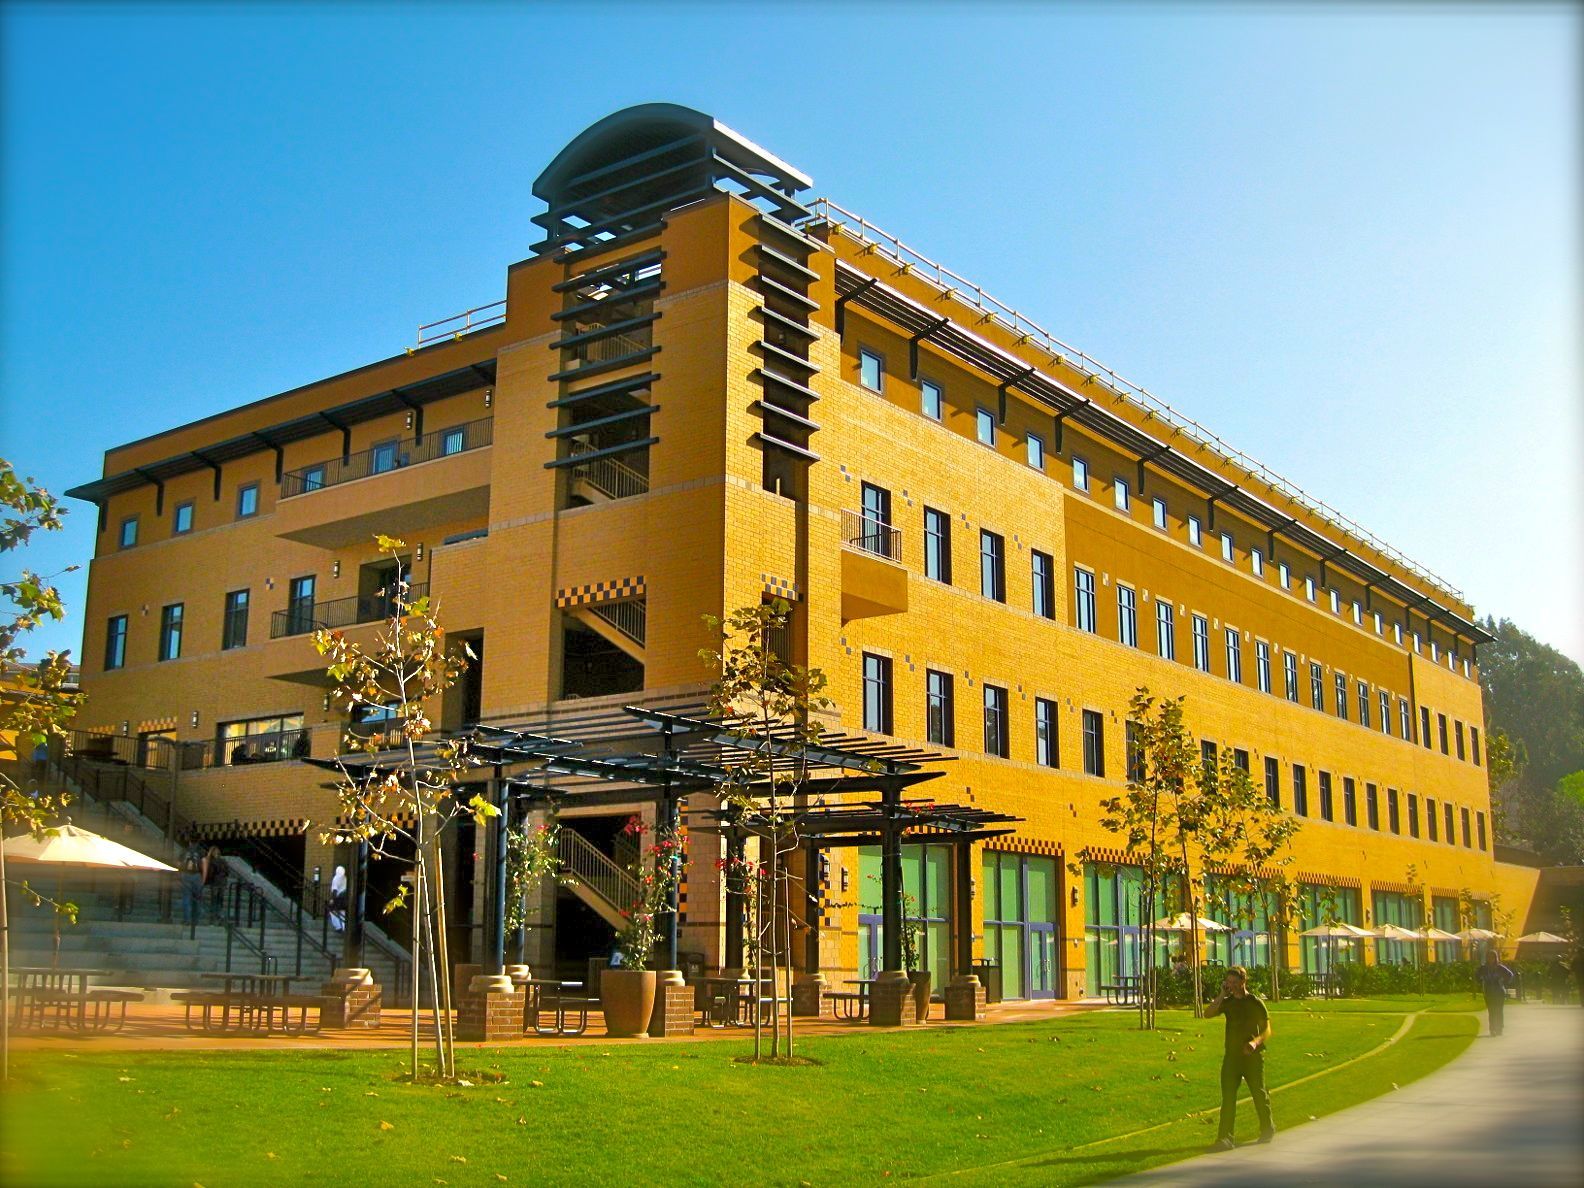 University of California Irvine (UCI) Extension Ana Okul Fotoğrafı